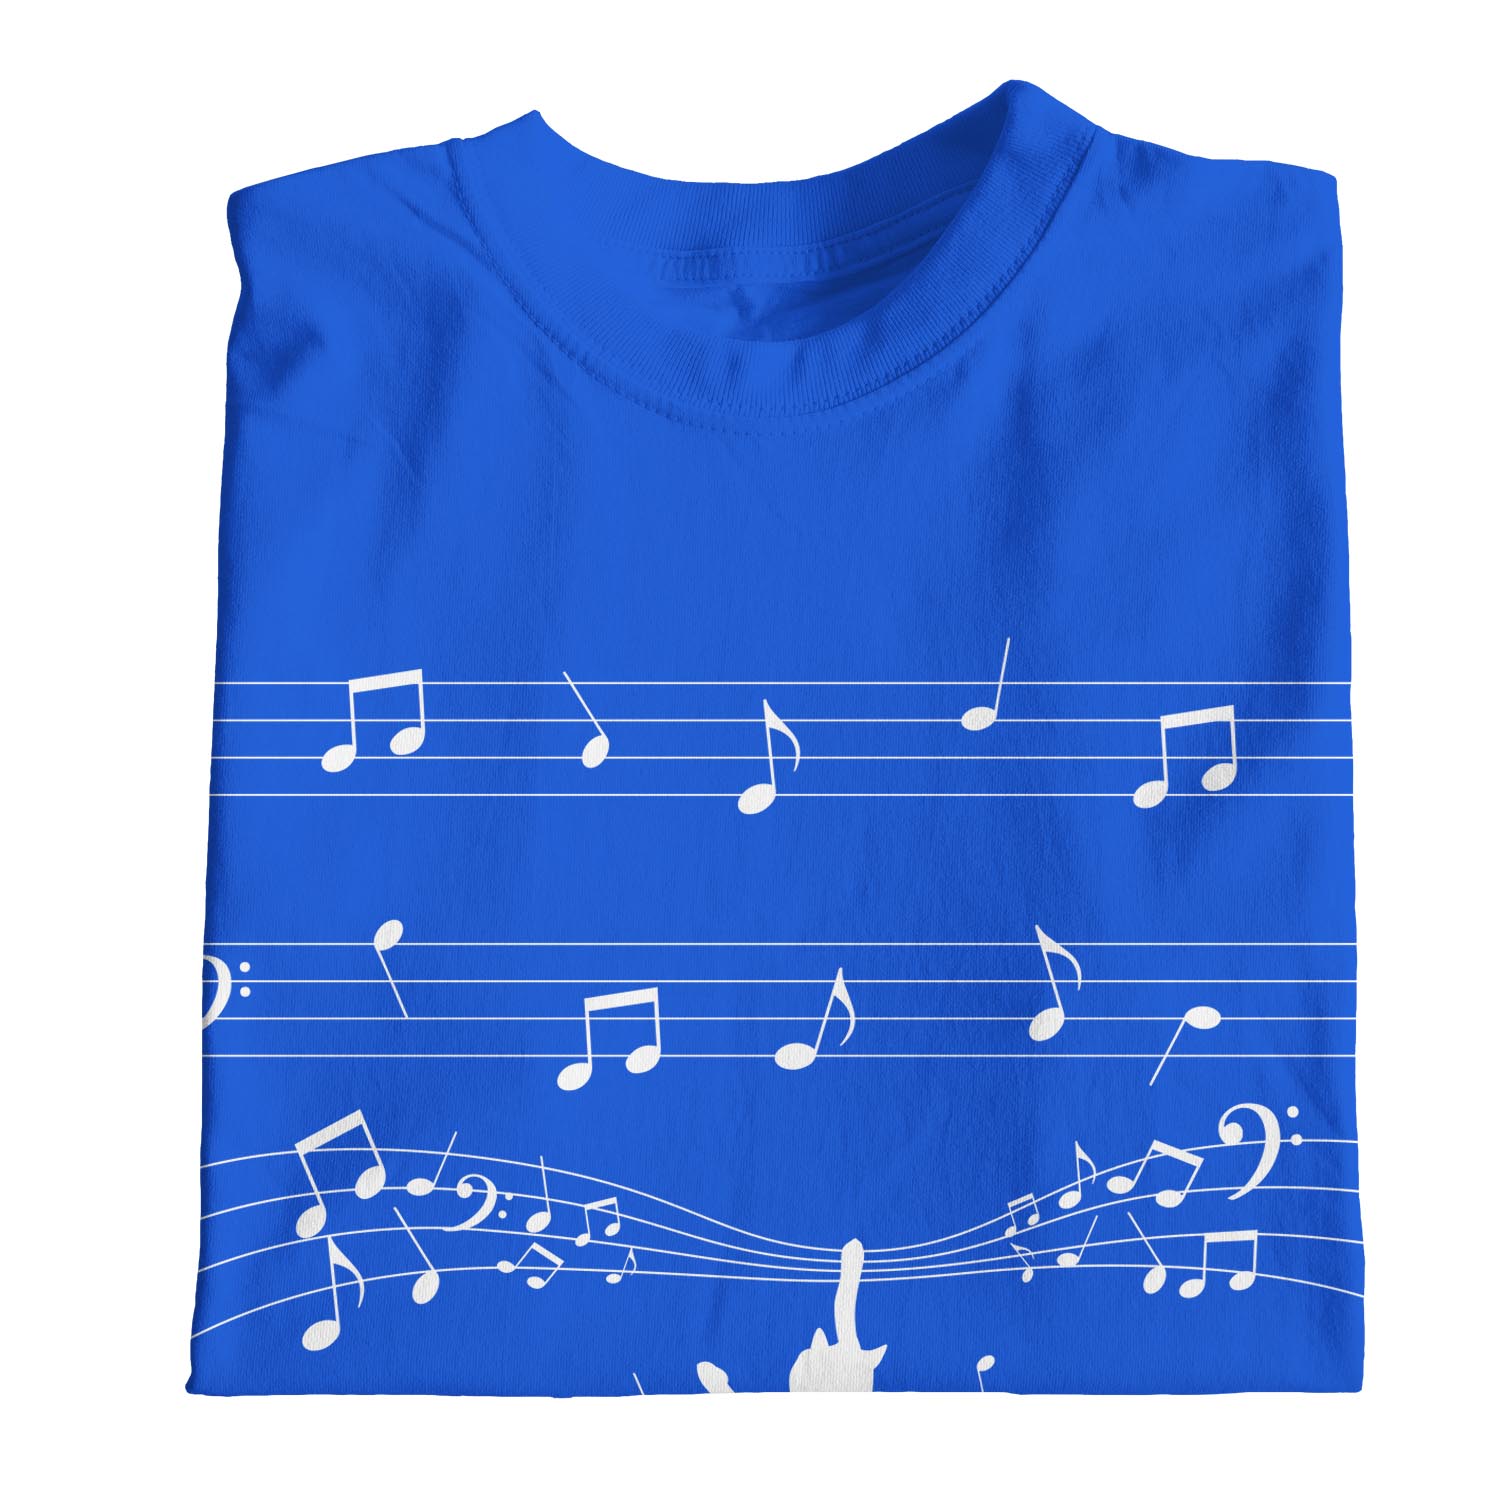 1Tee hoja de música para hombre y Gatos T-Shirt